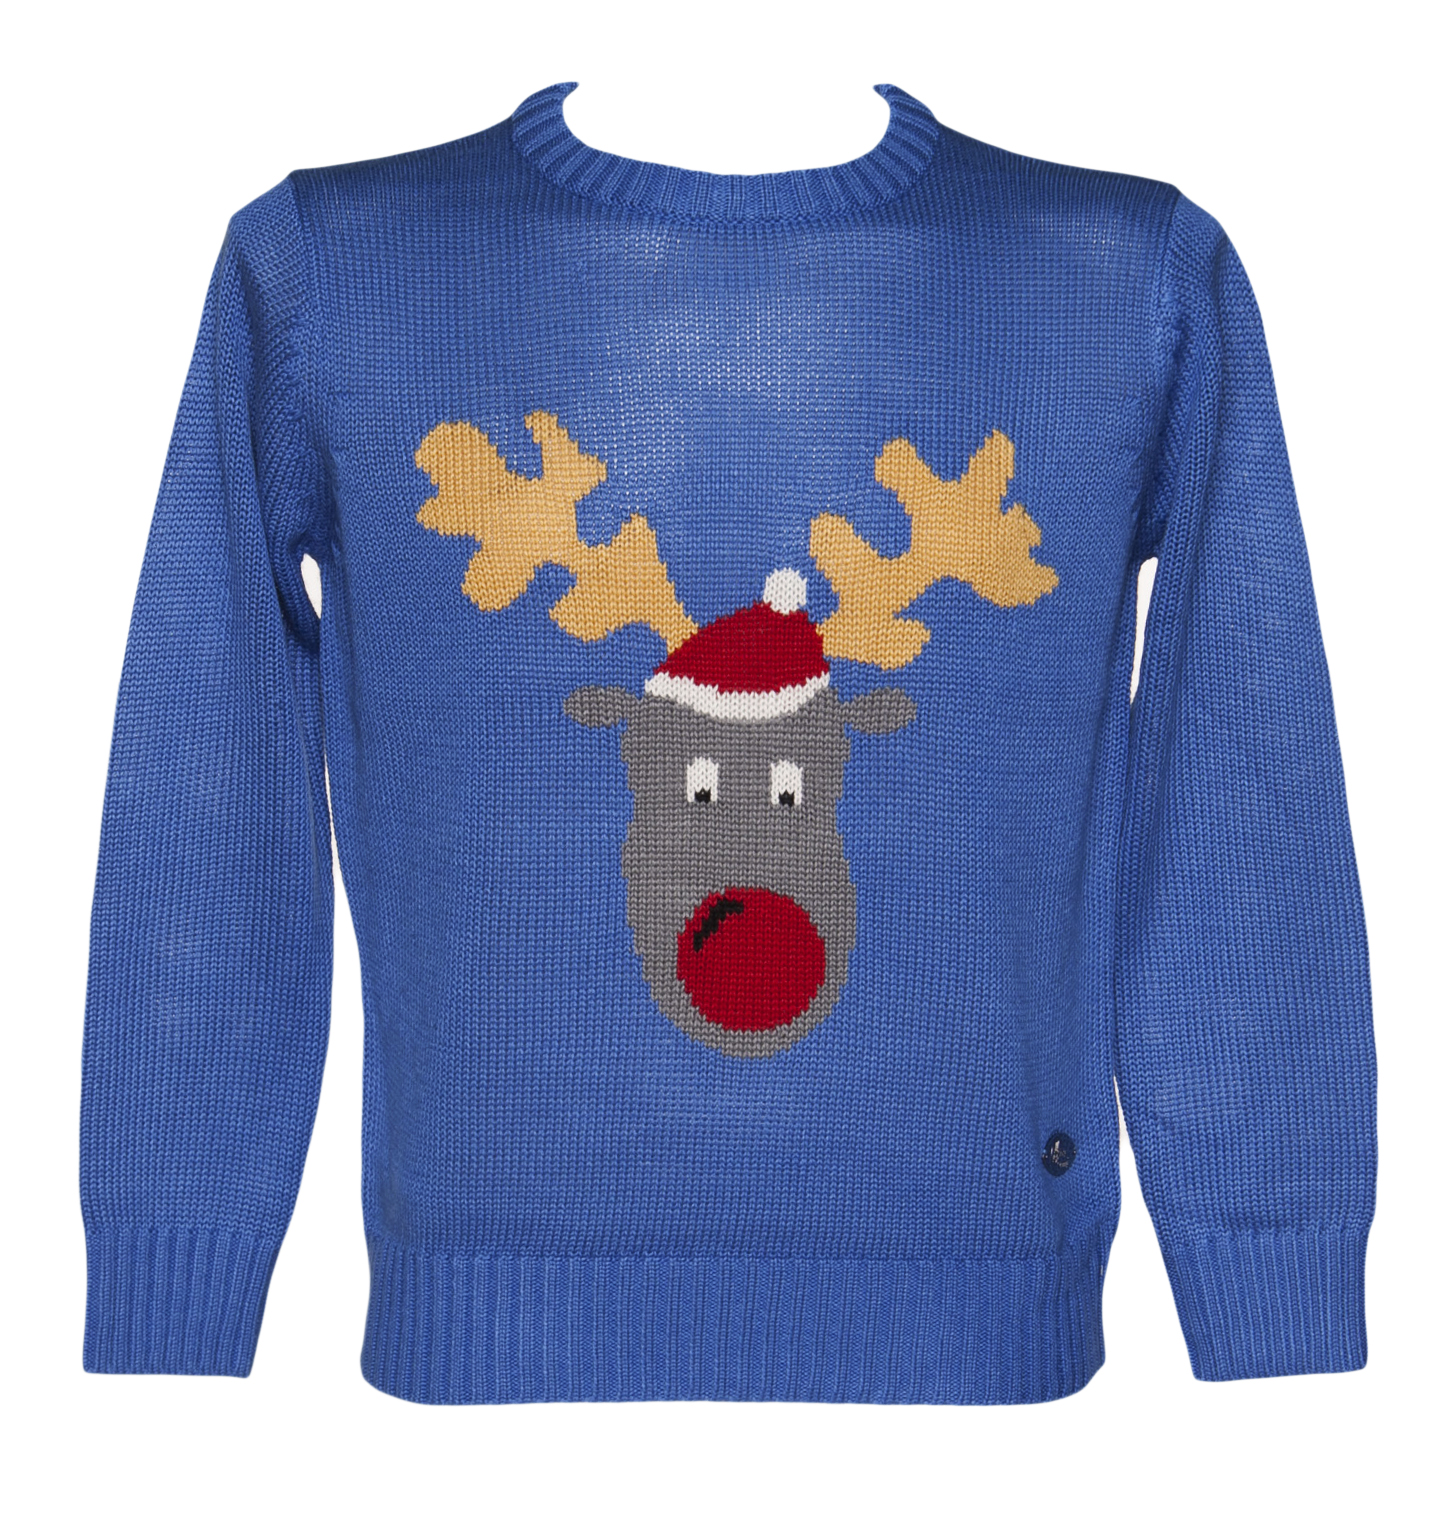 Crazy Granny Clothing Unisex Reggie Reindeer Christmas Jumper from